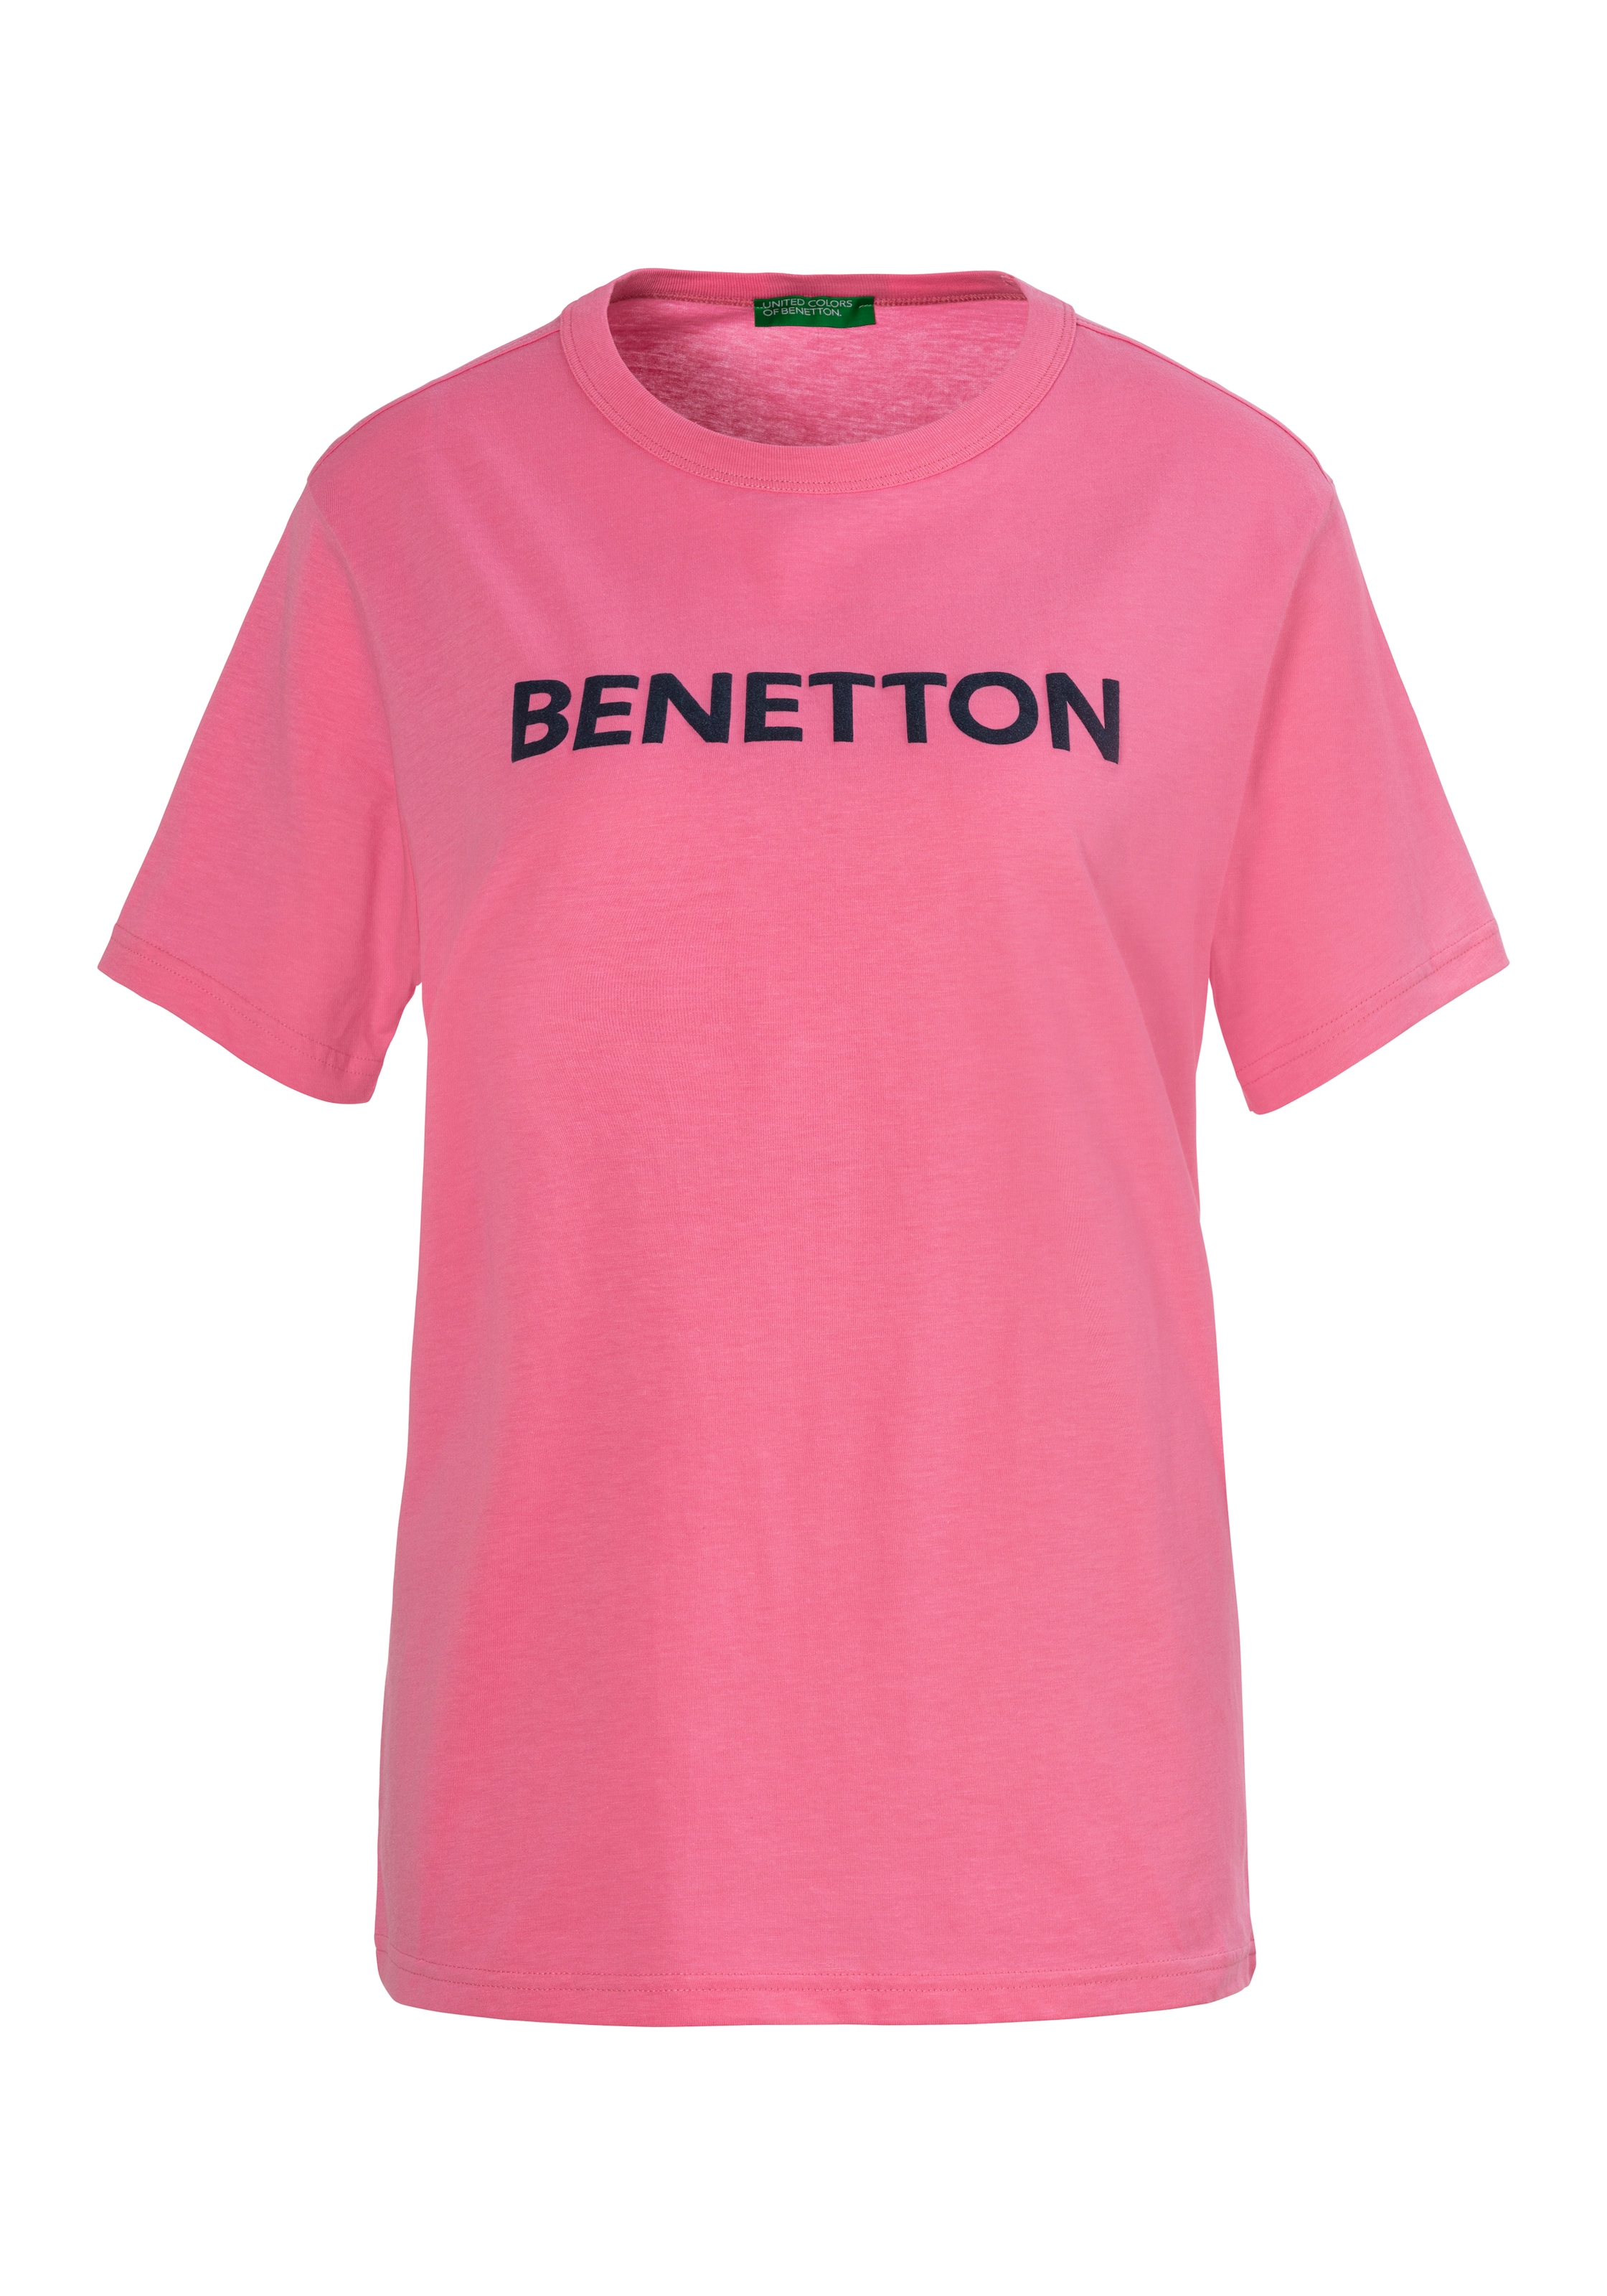 United Colors Benetton Aufdruck mit T-Shirt, shoppen of Benetton online